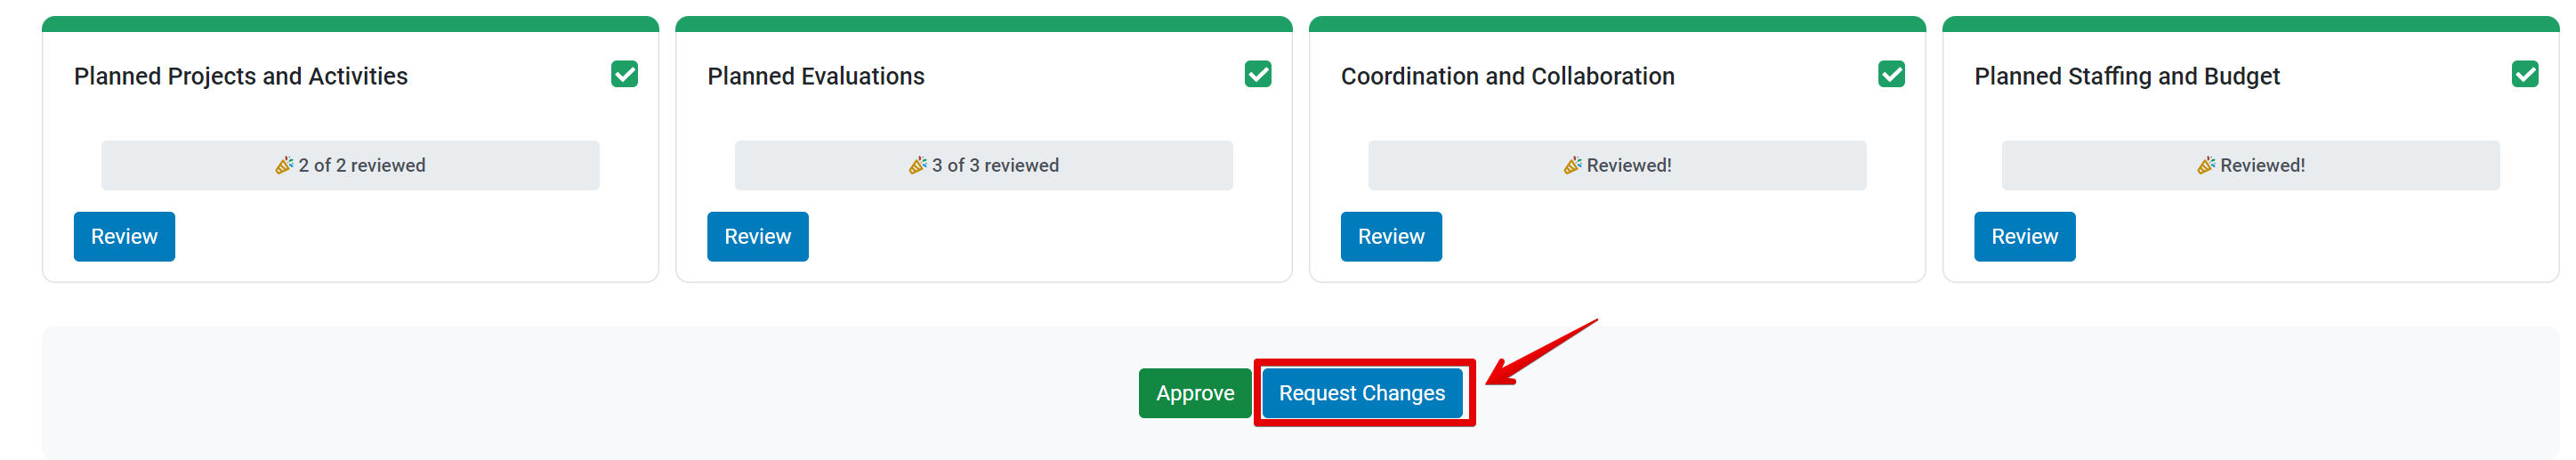 Request changes button